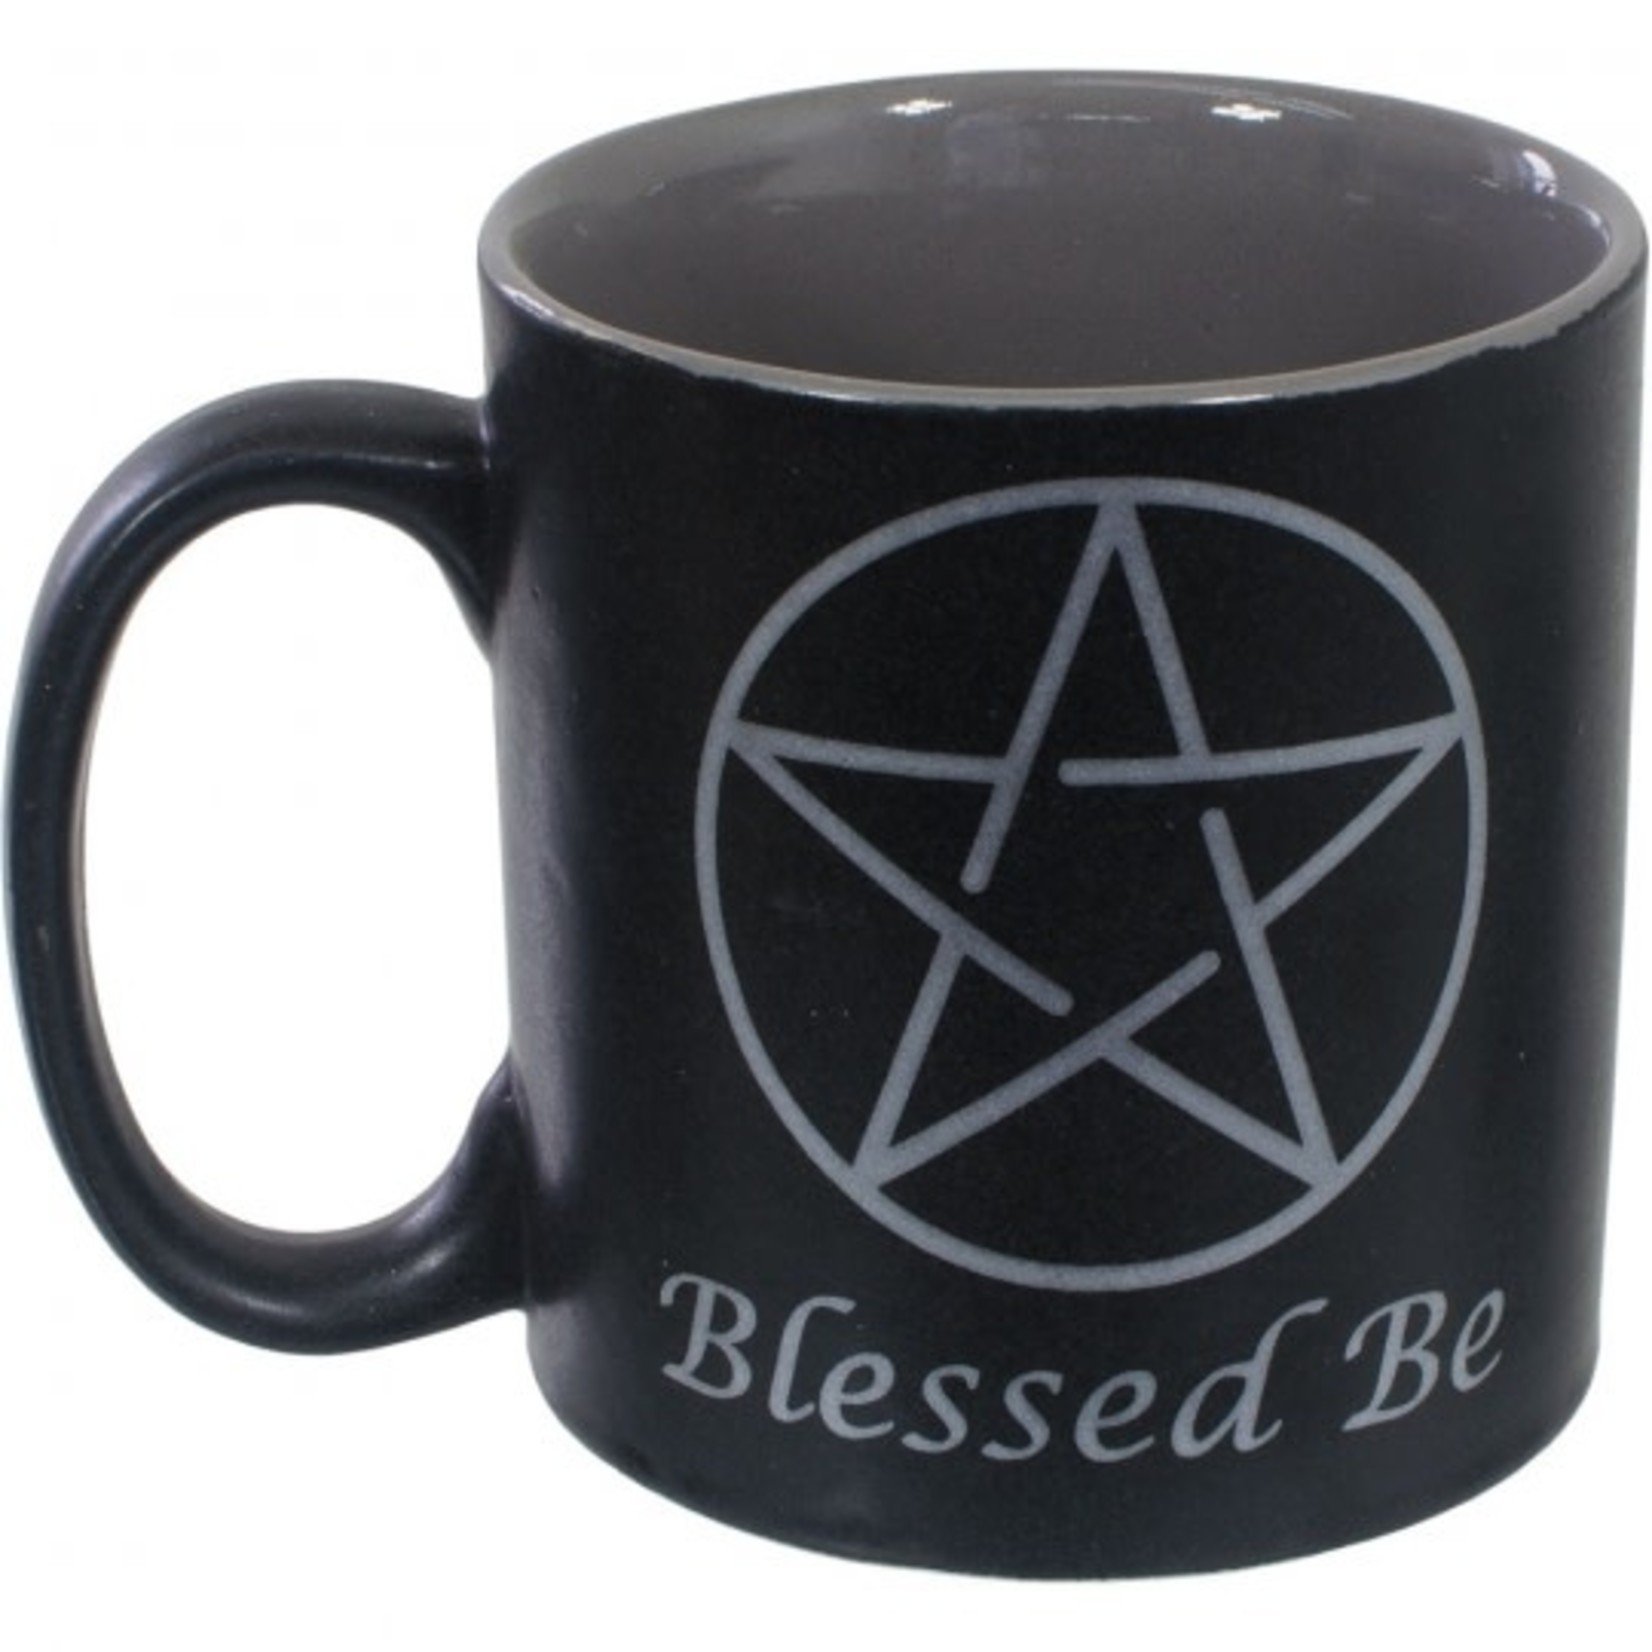 "Blessed Be" Ceramic Mug